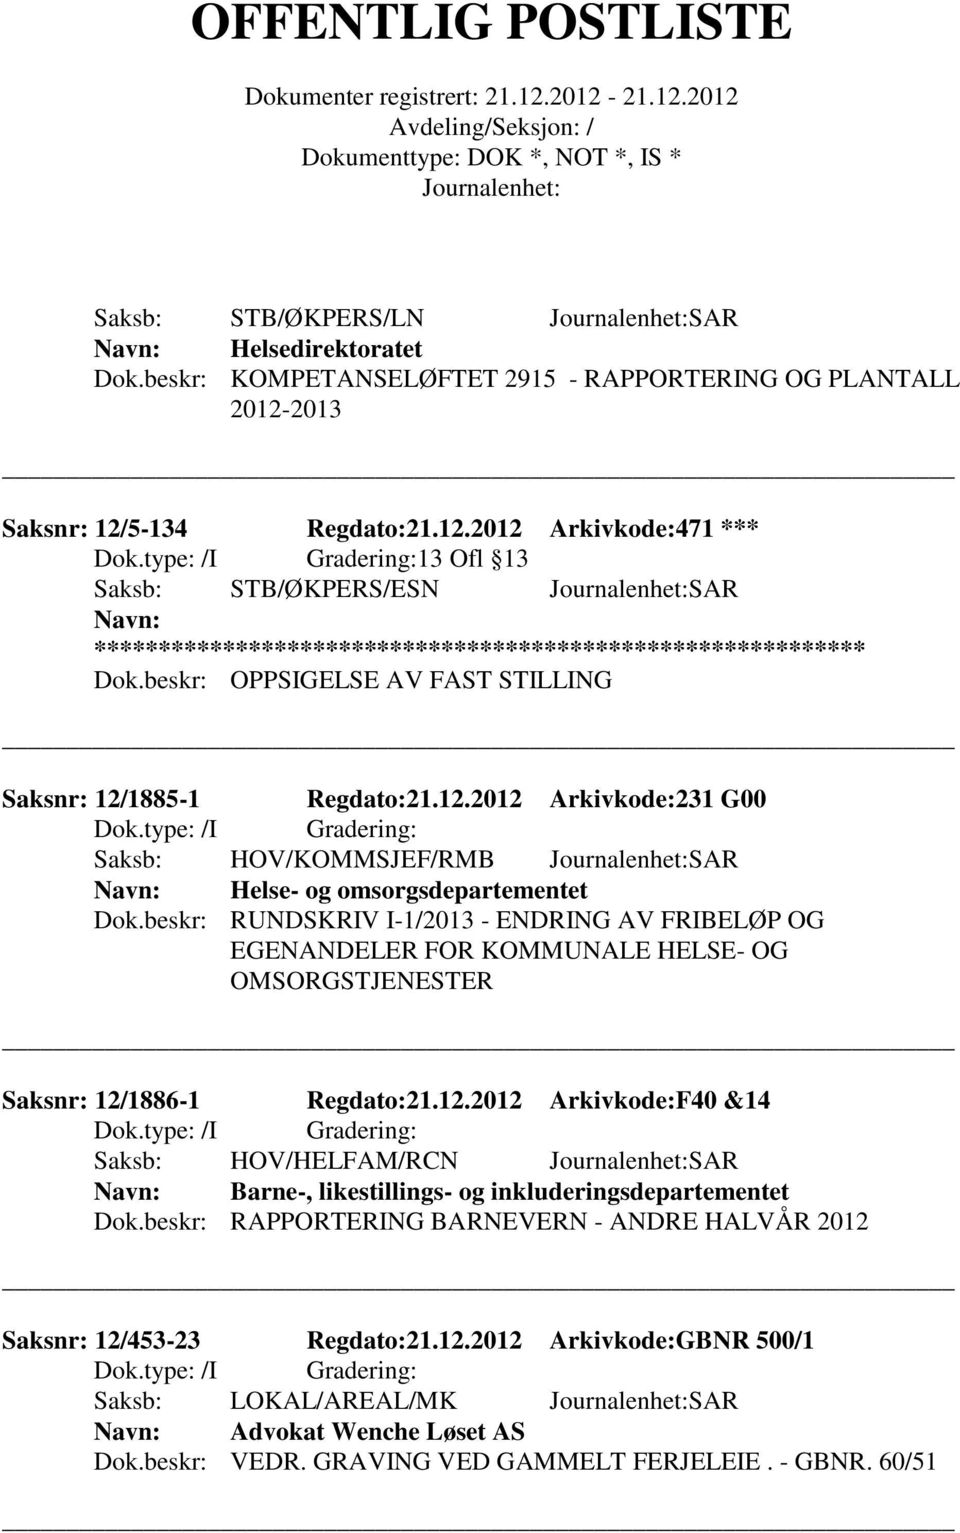 beskr: RUNDSKRIV I-1/2013 - ENDRING AV FRIBELØP OG EGENANDELER FOR KOMMUNALE HELSE- OG OMSORGSTJENESTER Saksnr: 12/